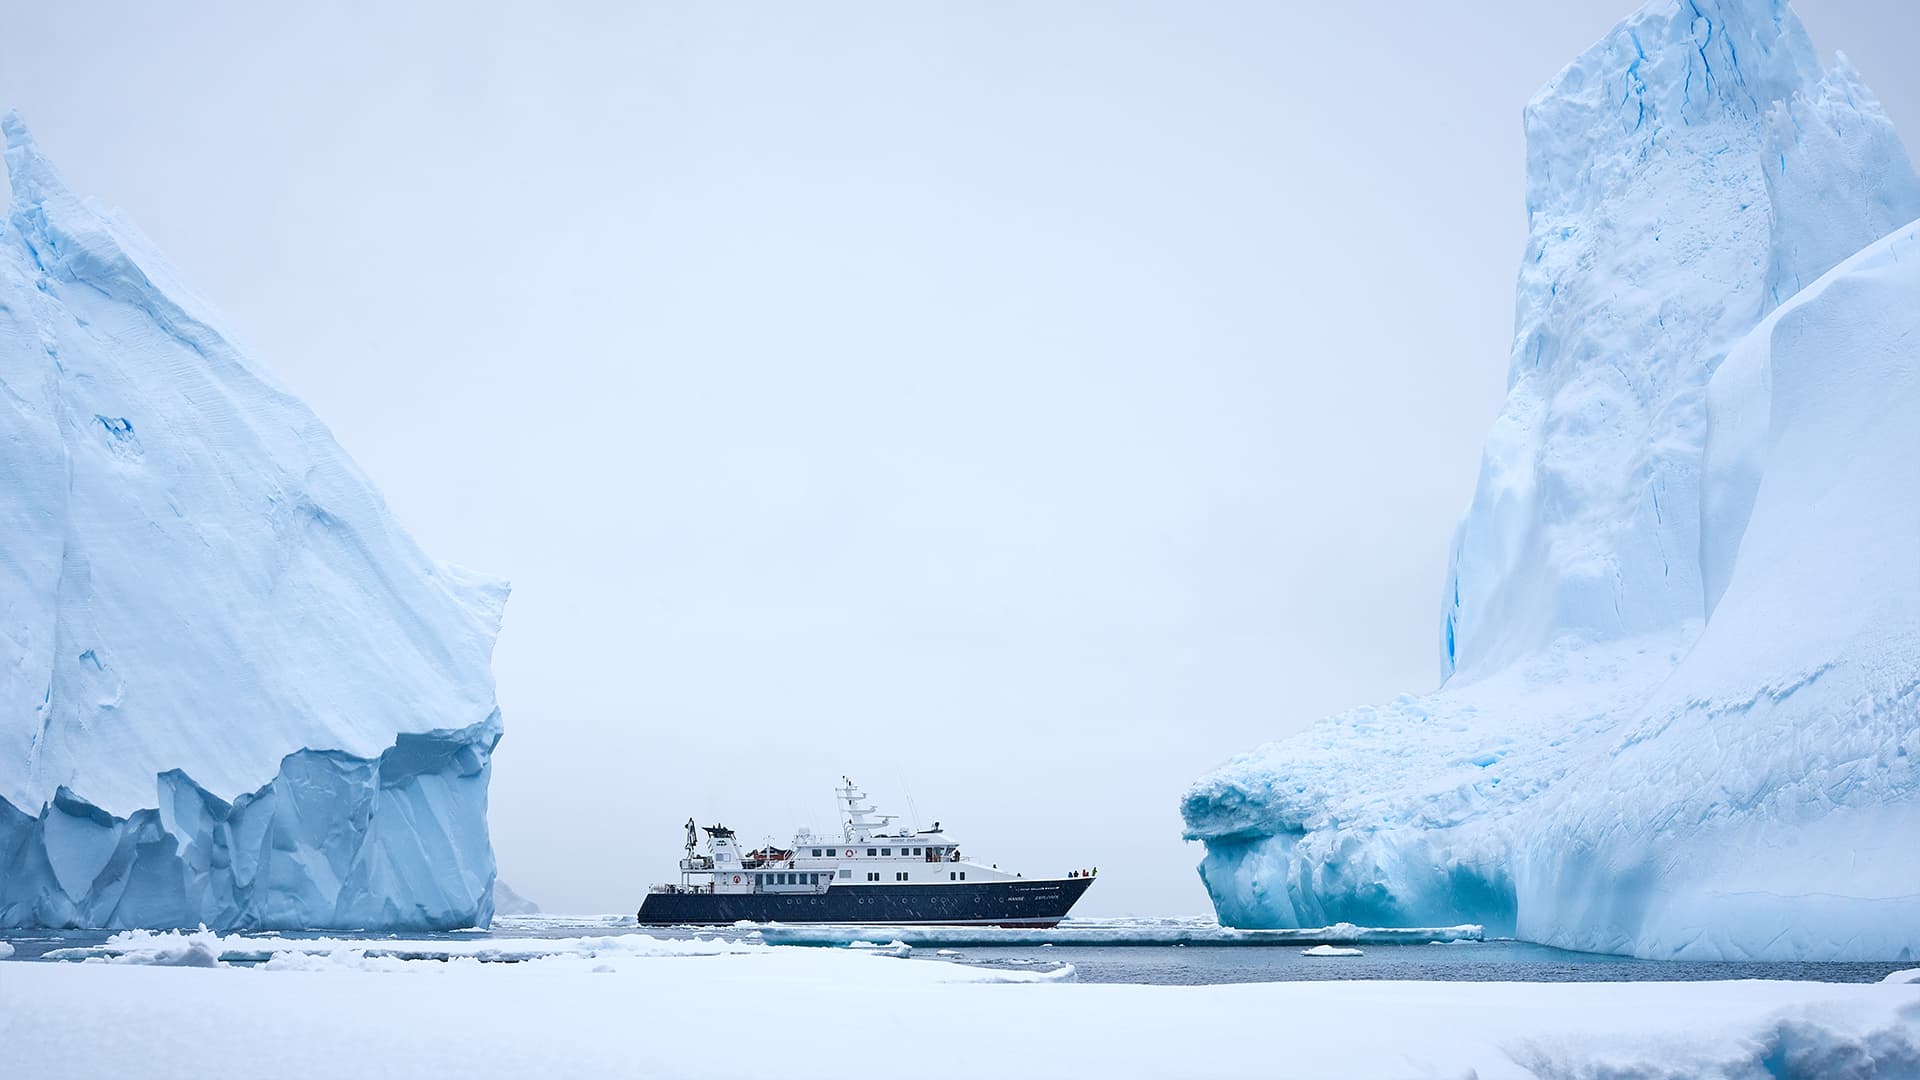 4 - Yacht_HanseExplorer_©ReeveJolliffeEYOS©_location(Antarctica_Peninsula)____20170203_215159_950_[5972x3795]_2.2MB-1920x1080-LR